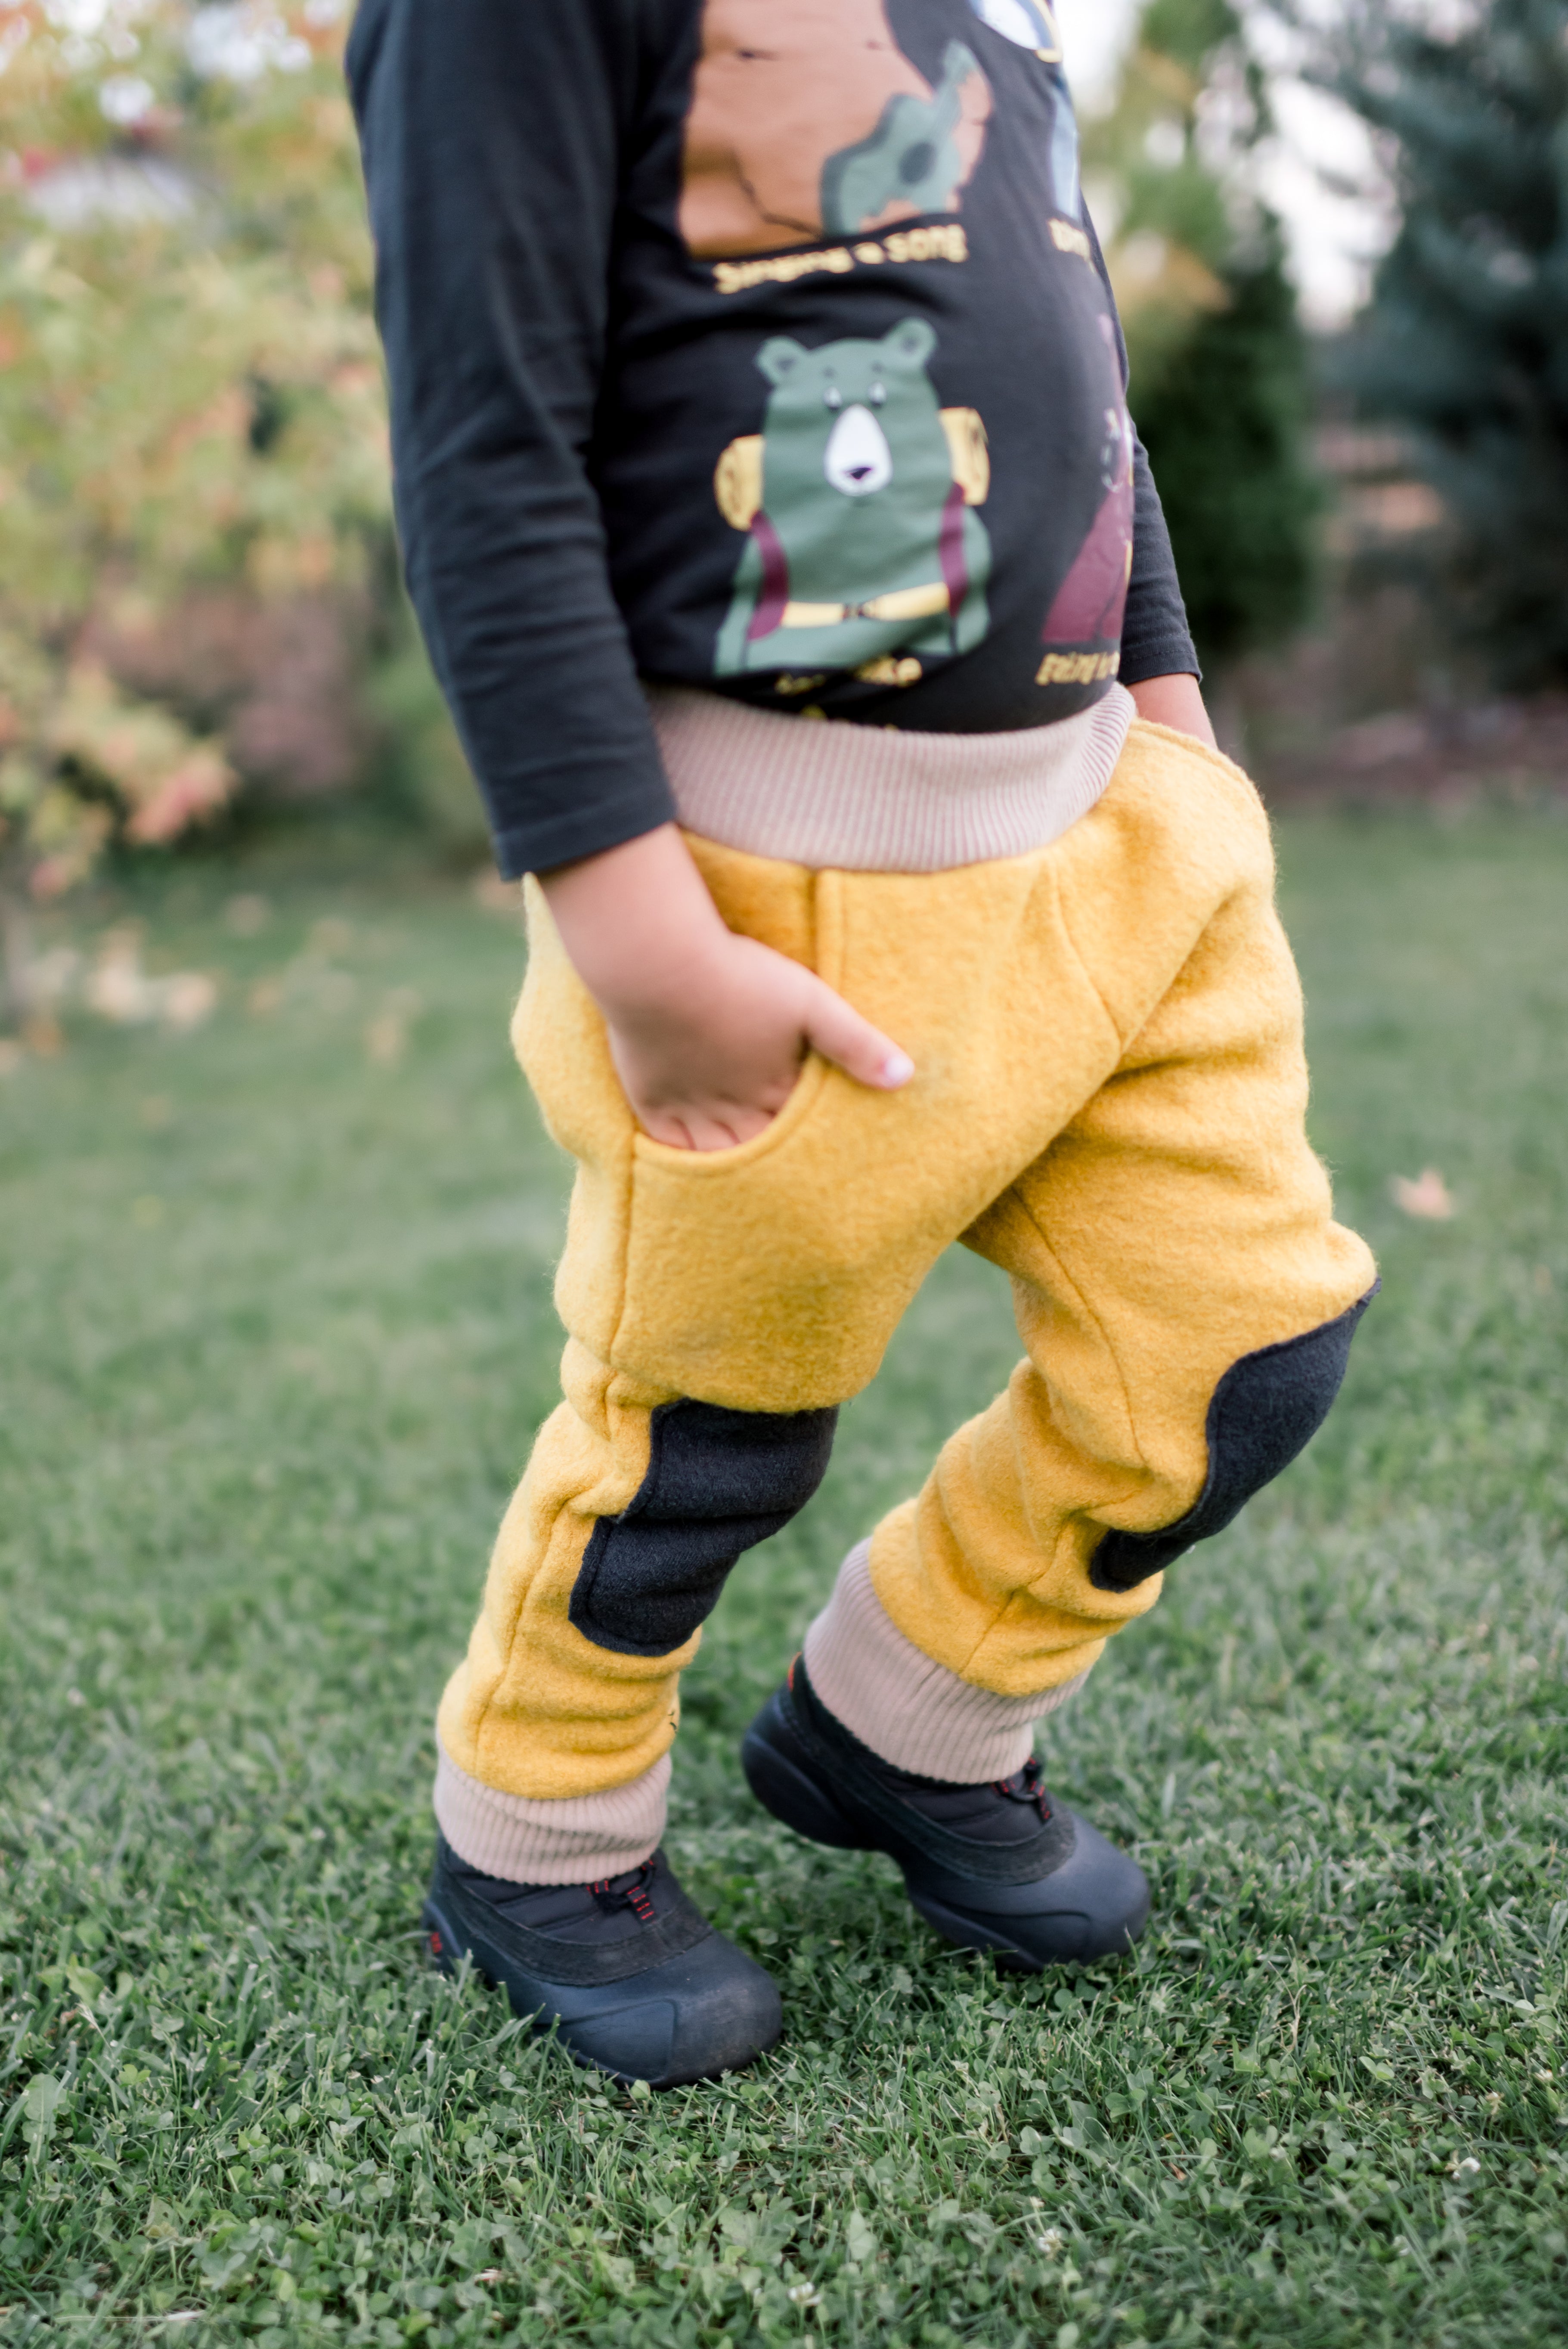 Pantaloni dublati din lana fiarta - Mustard Yellow